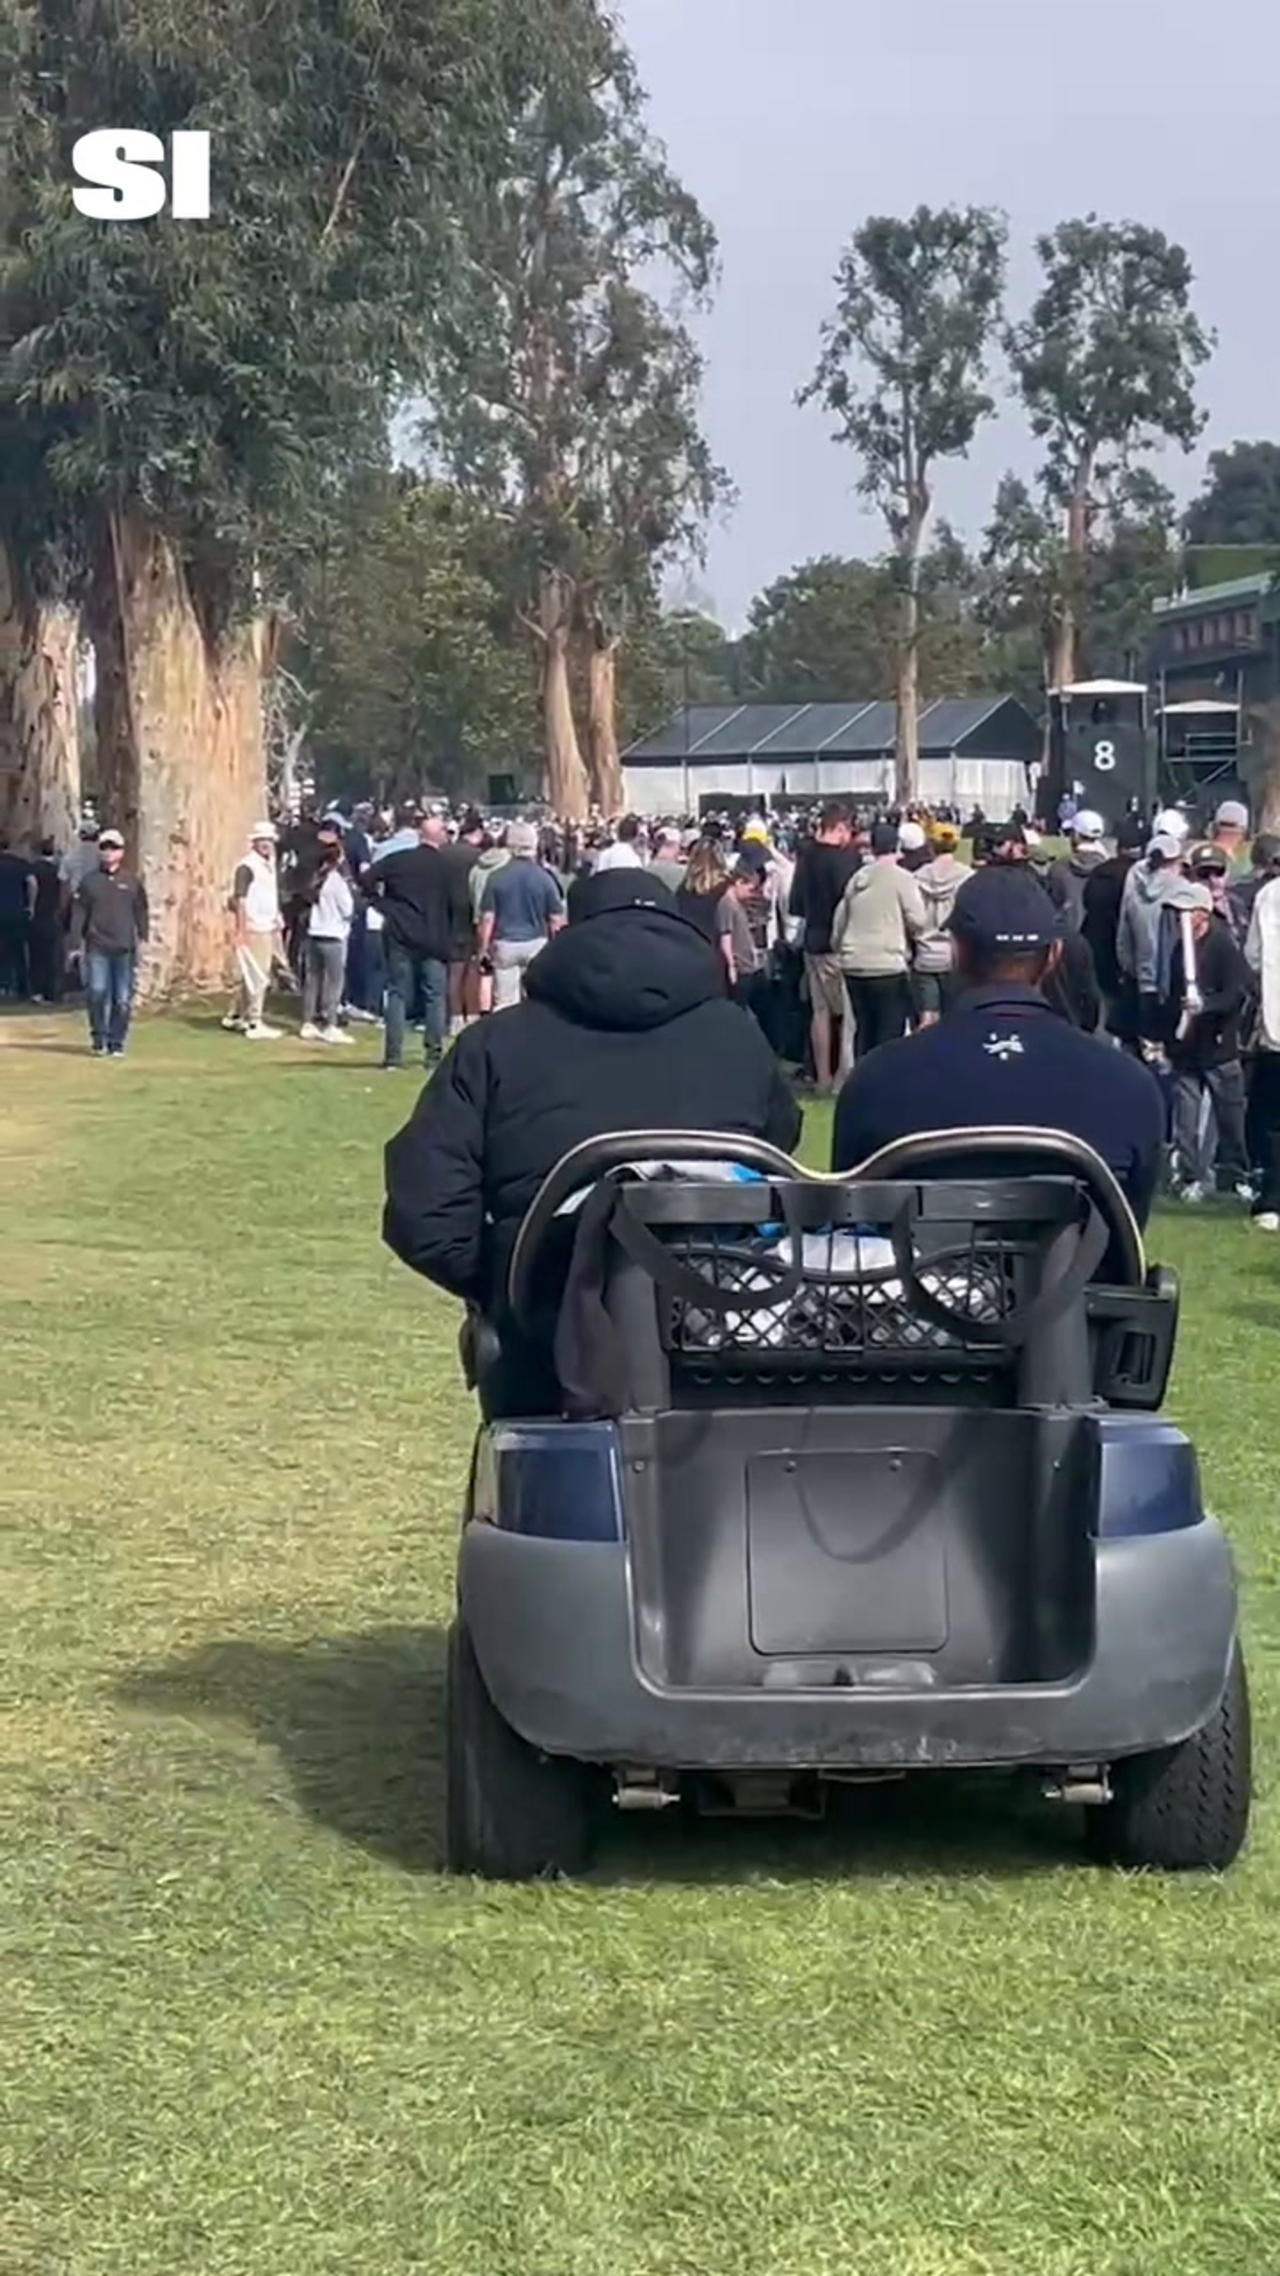 Tiger Woods Leaves The Genesis Invitational on Golf Cart (Video)